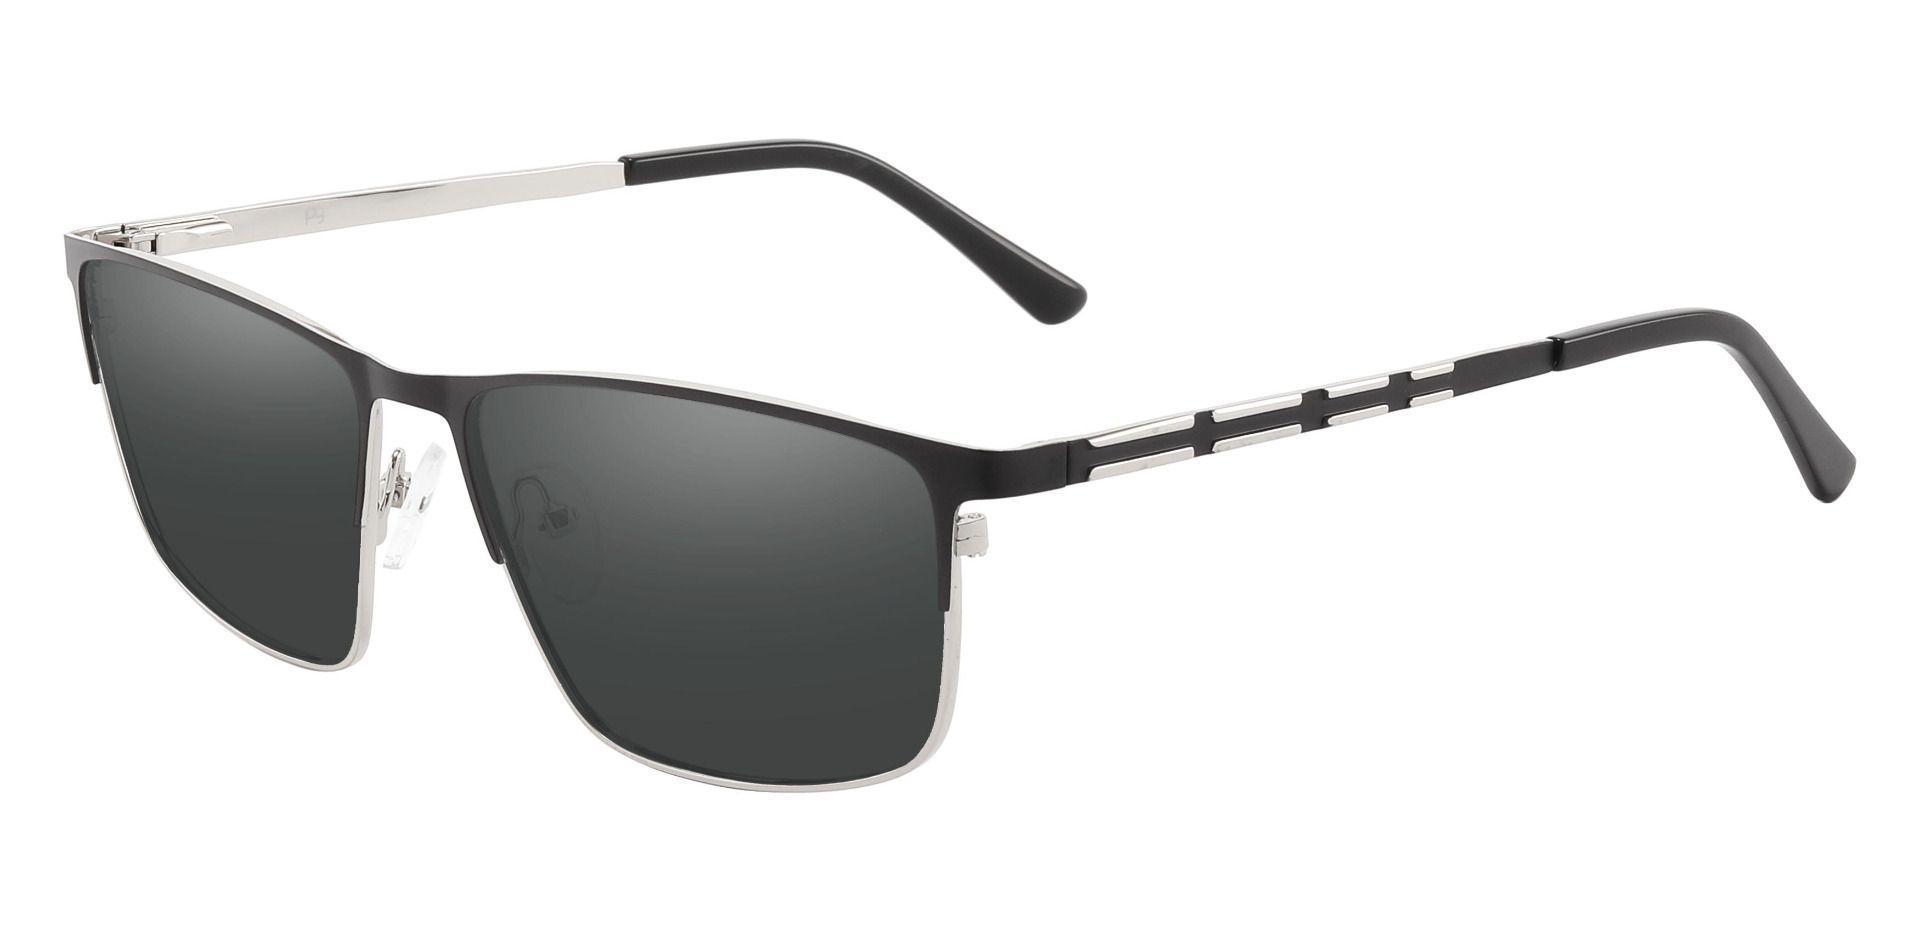 Hamlet Browline Prescription Sunglasses - Black Frame With Gray Lenses